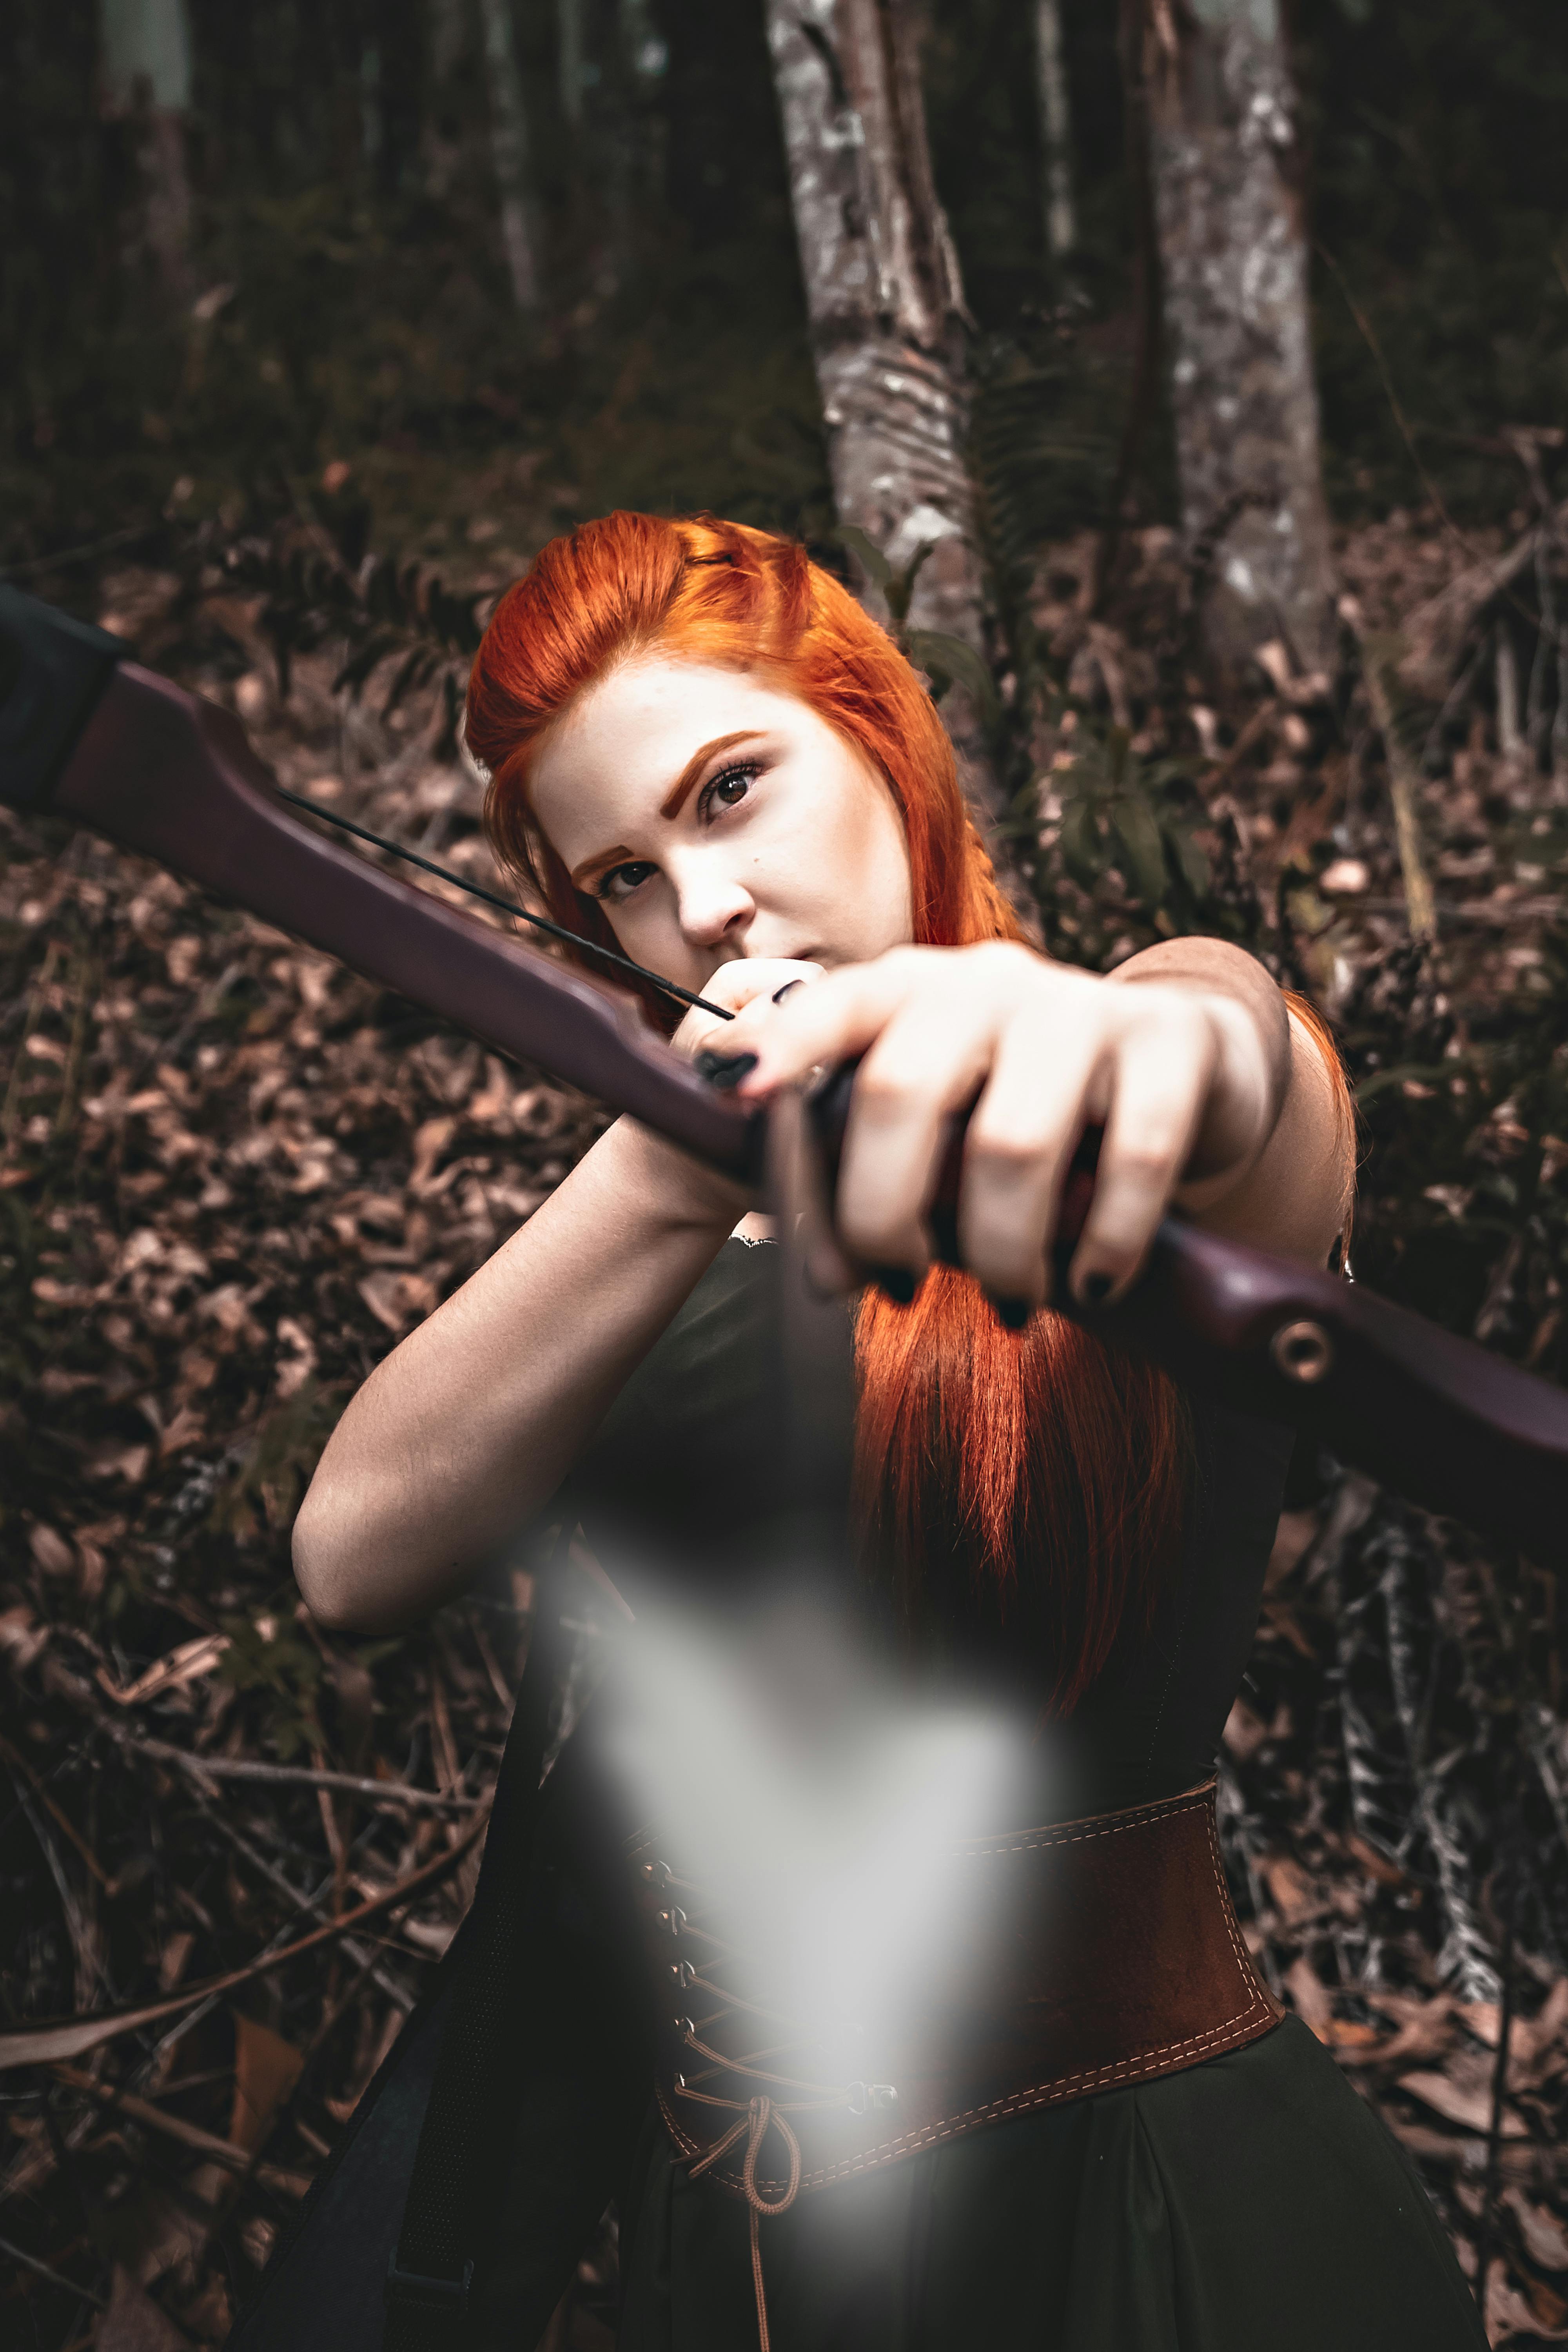 medieval girl red hair